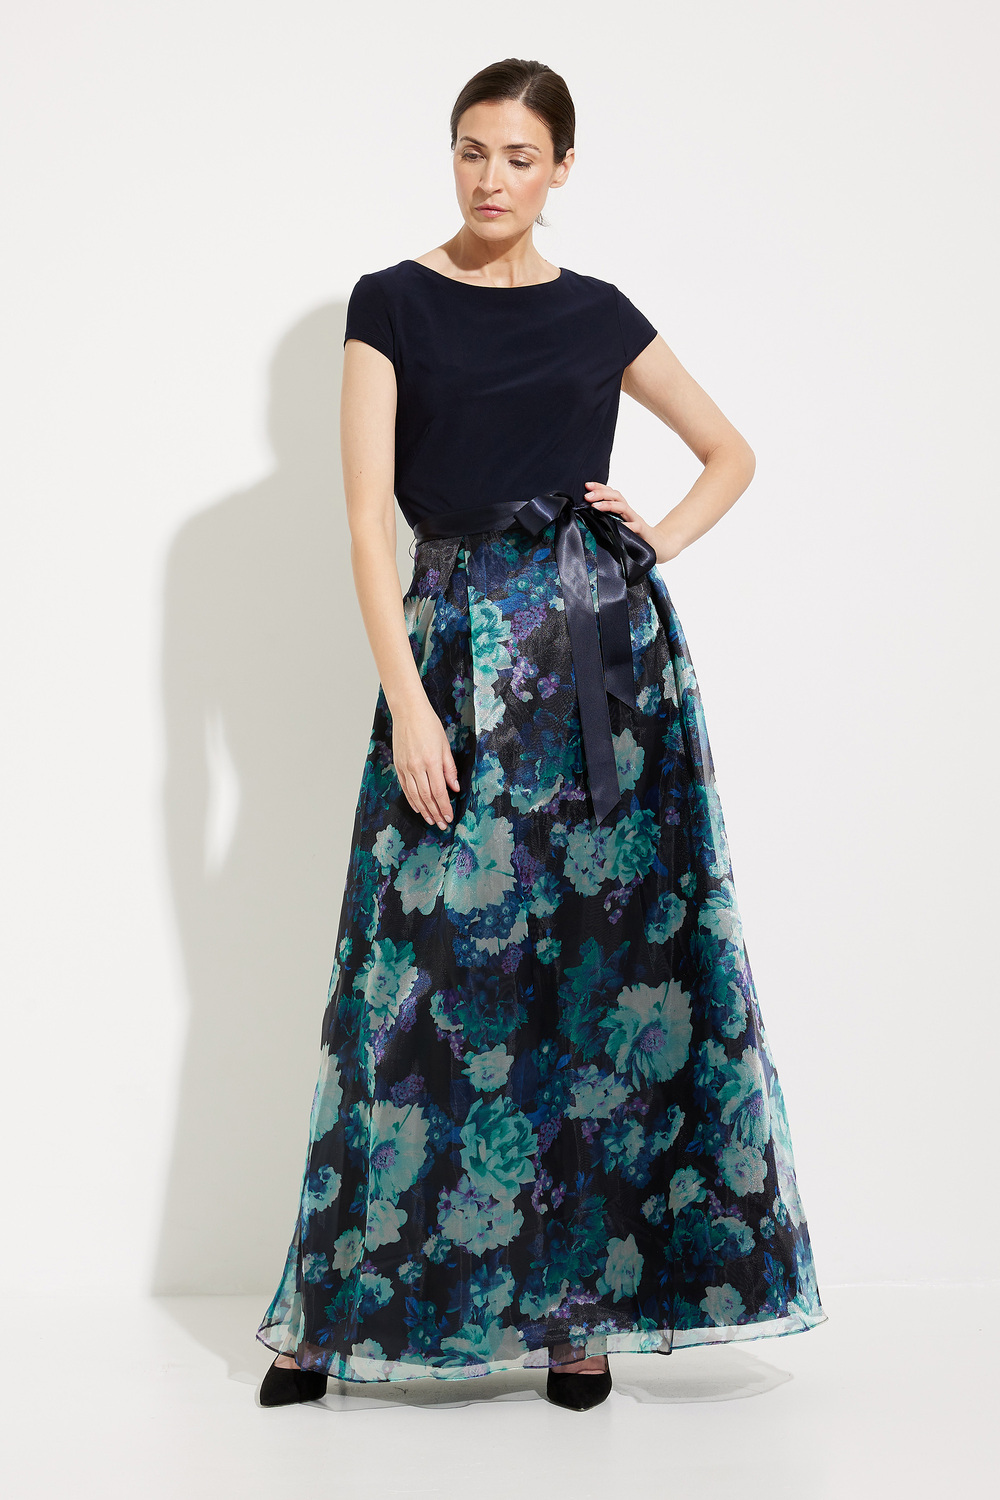 Printed Organza Skirt Dress Style 9141141. Navy Multi